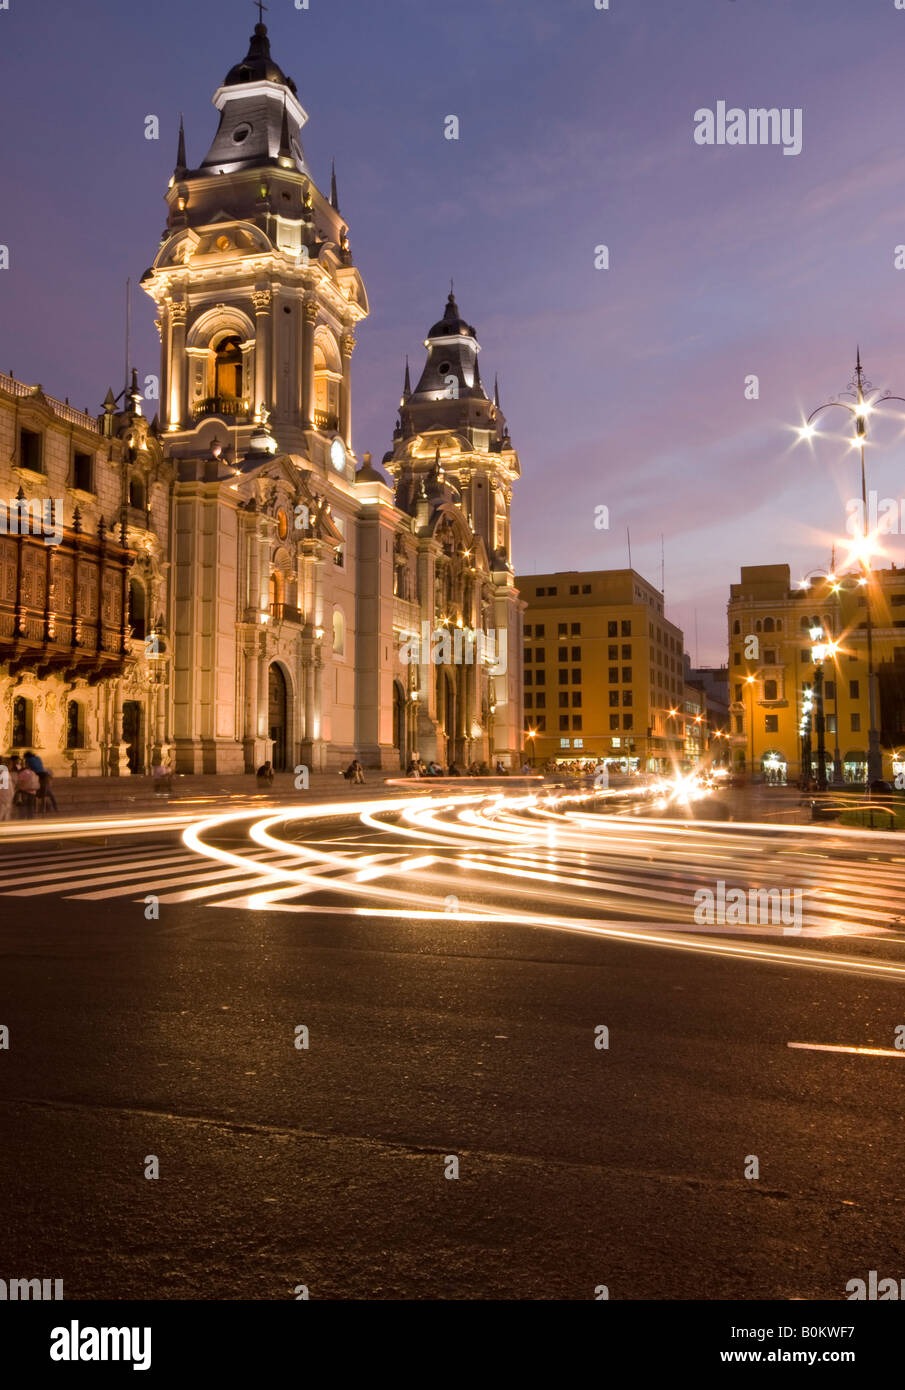 catedral on plaza de armas mayor lima peru night scene with movement streaks Stock Photo